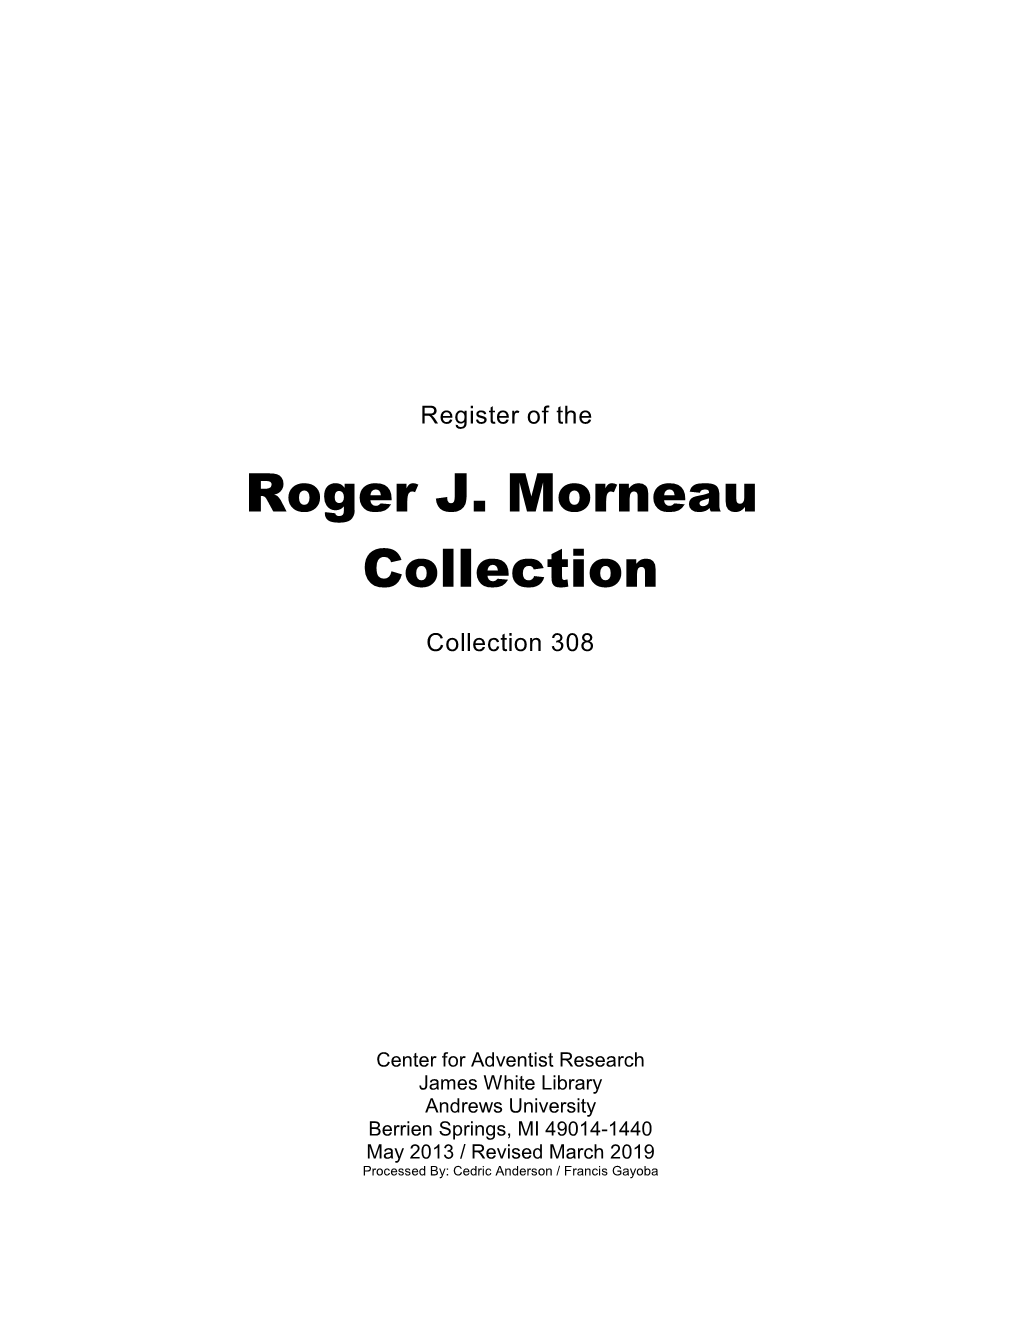 Roger J. Morneau Collection